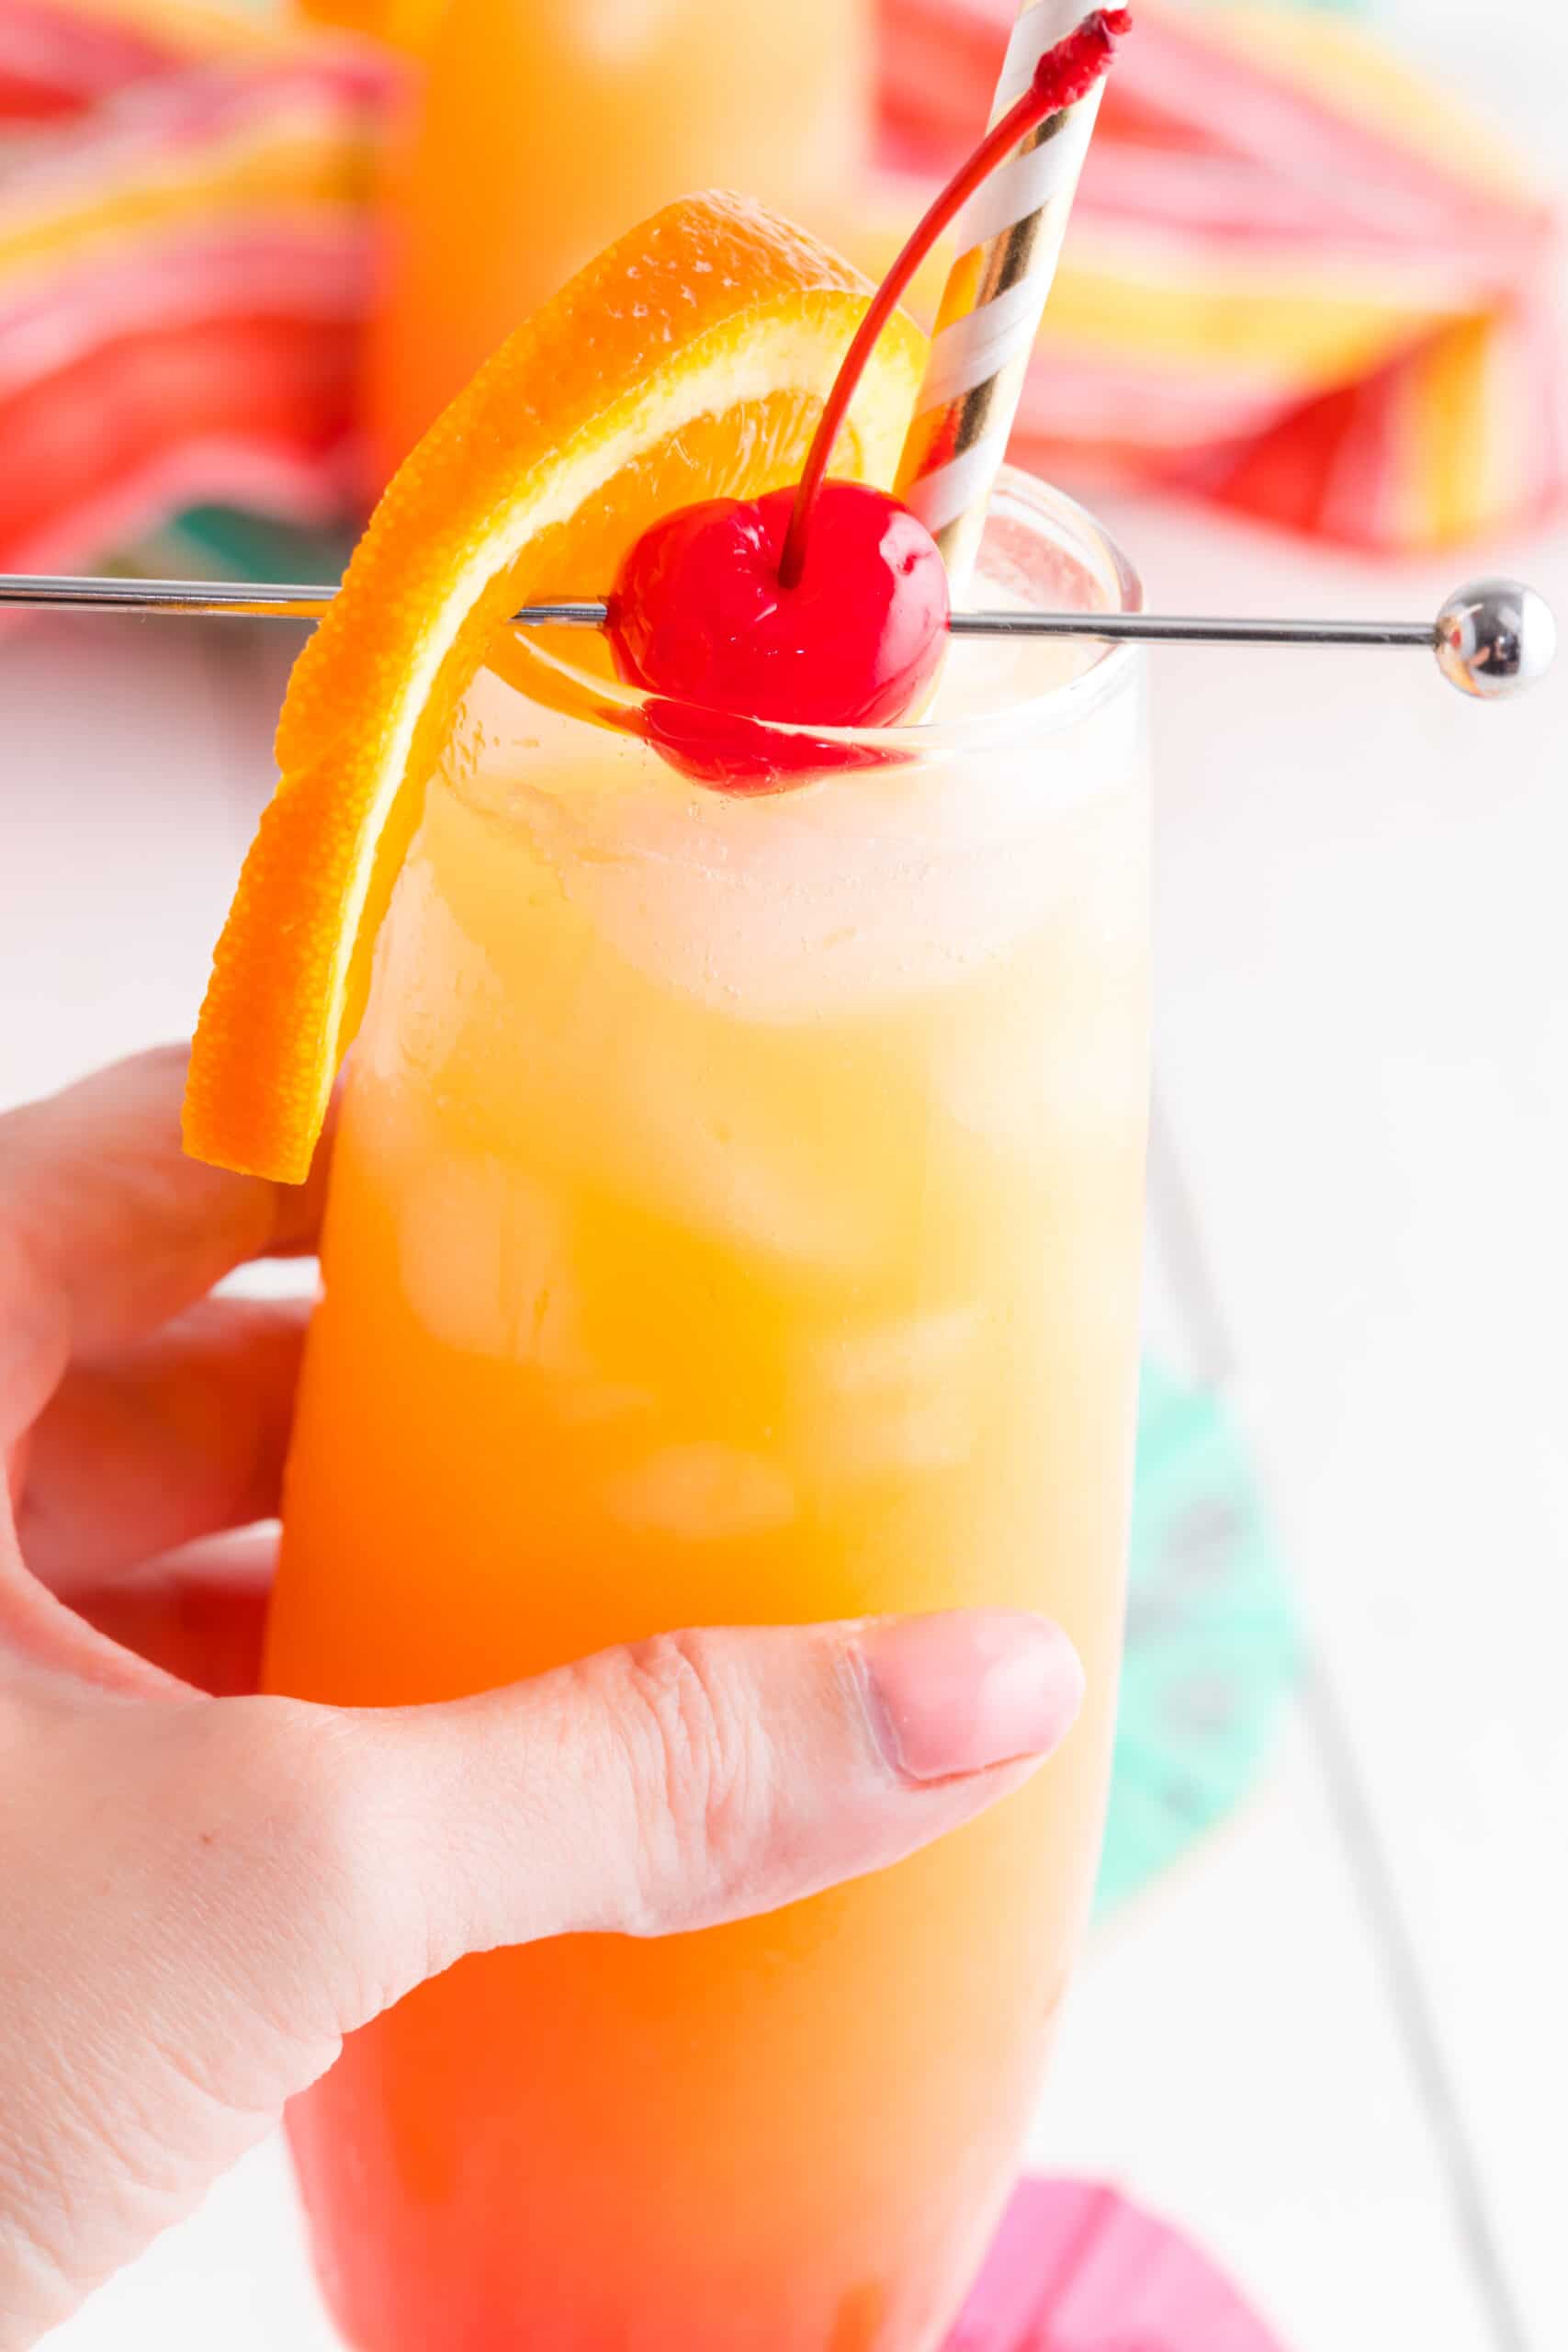 Hand holding a orange juice cocktail with fruit garnish.